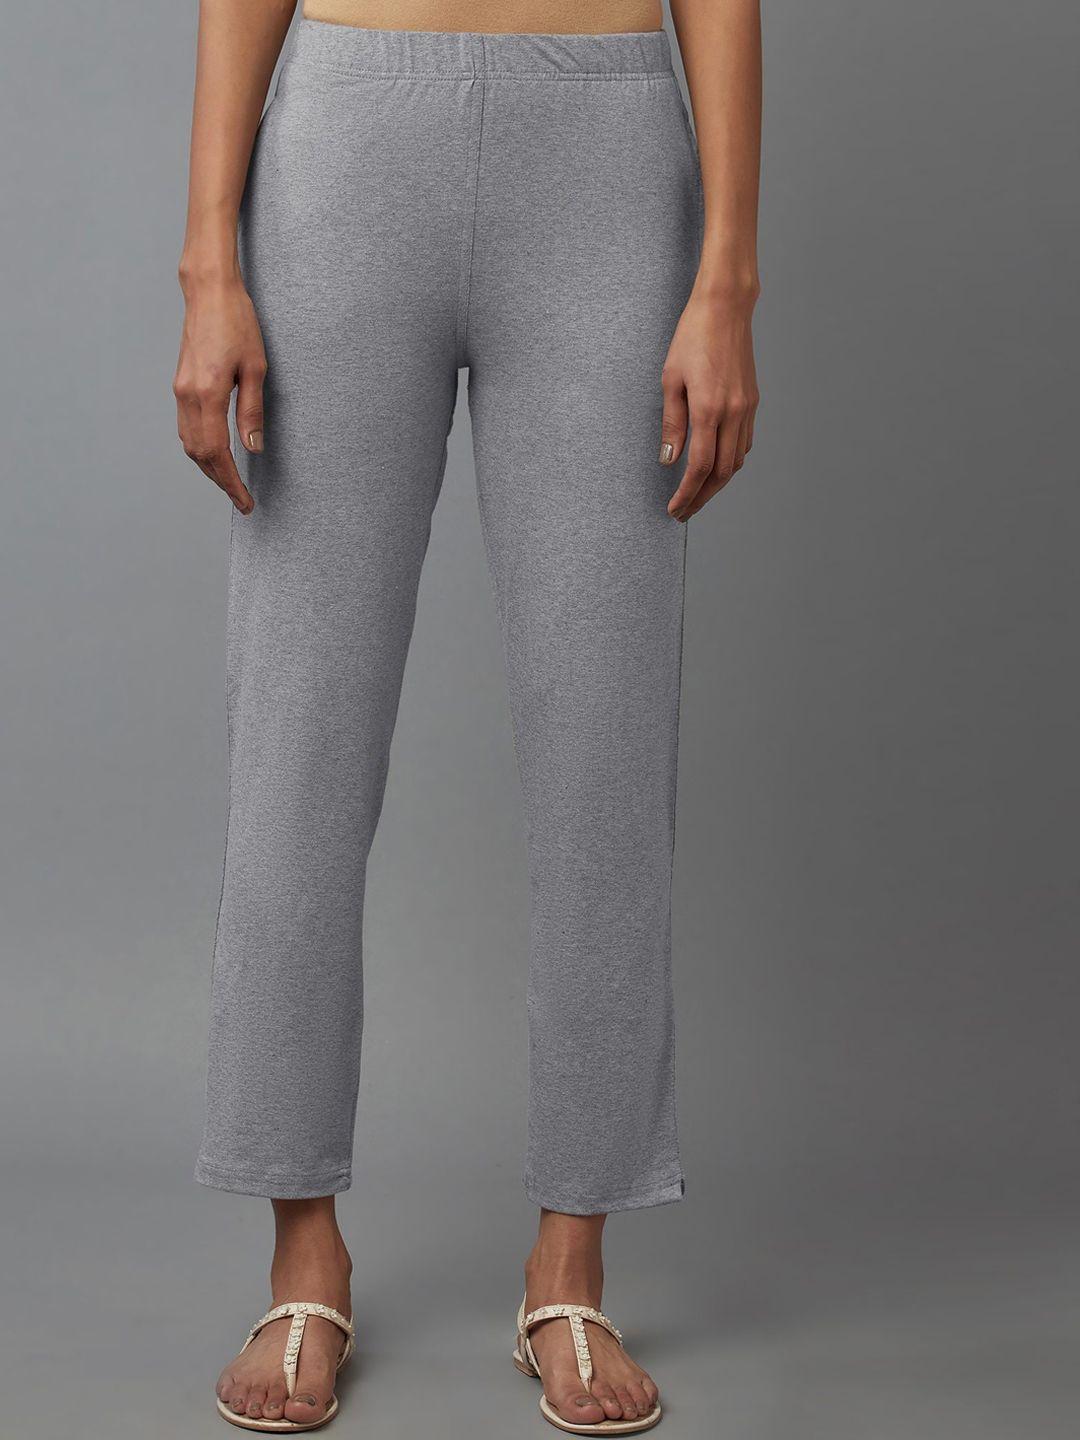 elleven women grey original regular fit cropped trousers